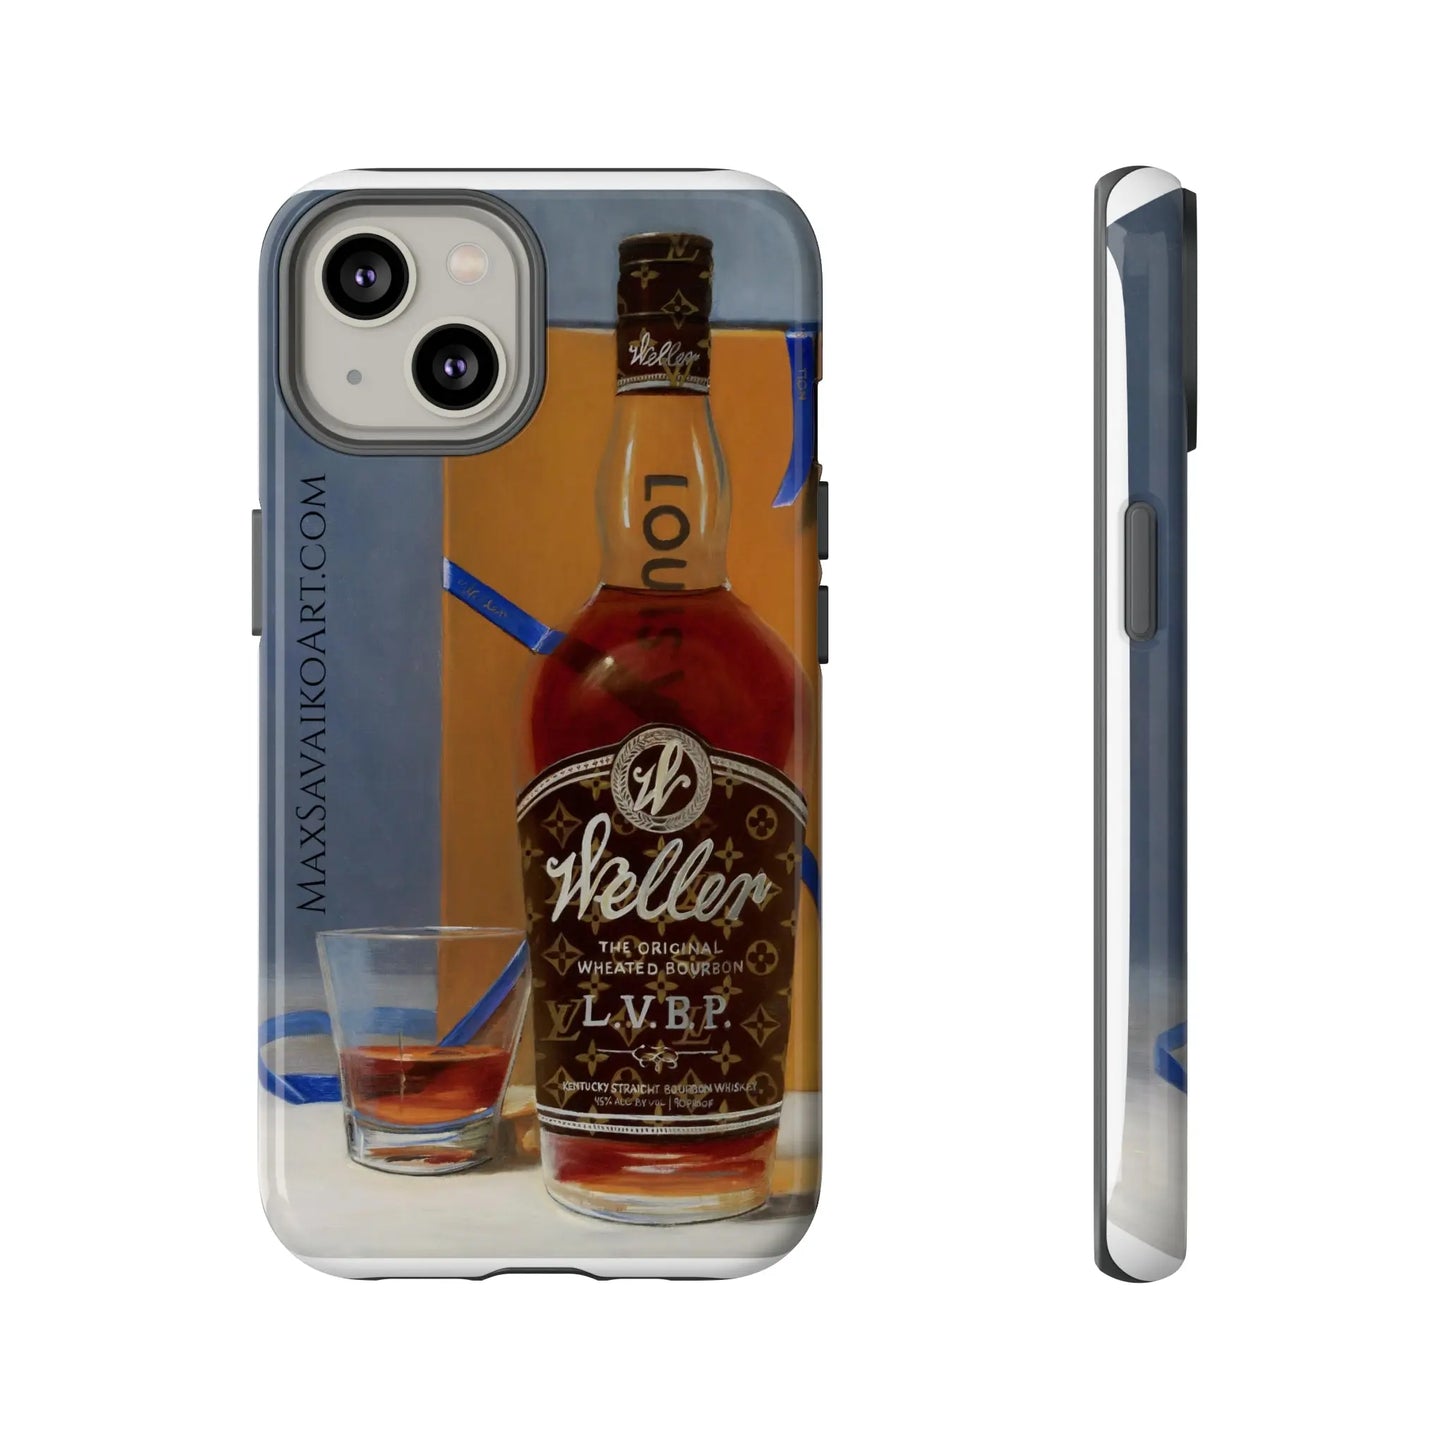 Weller Bourbon iPhone case samsung case louis vuitton